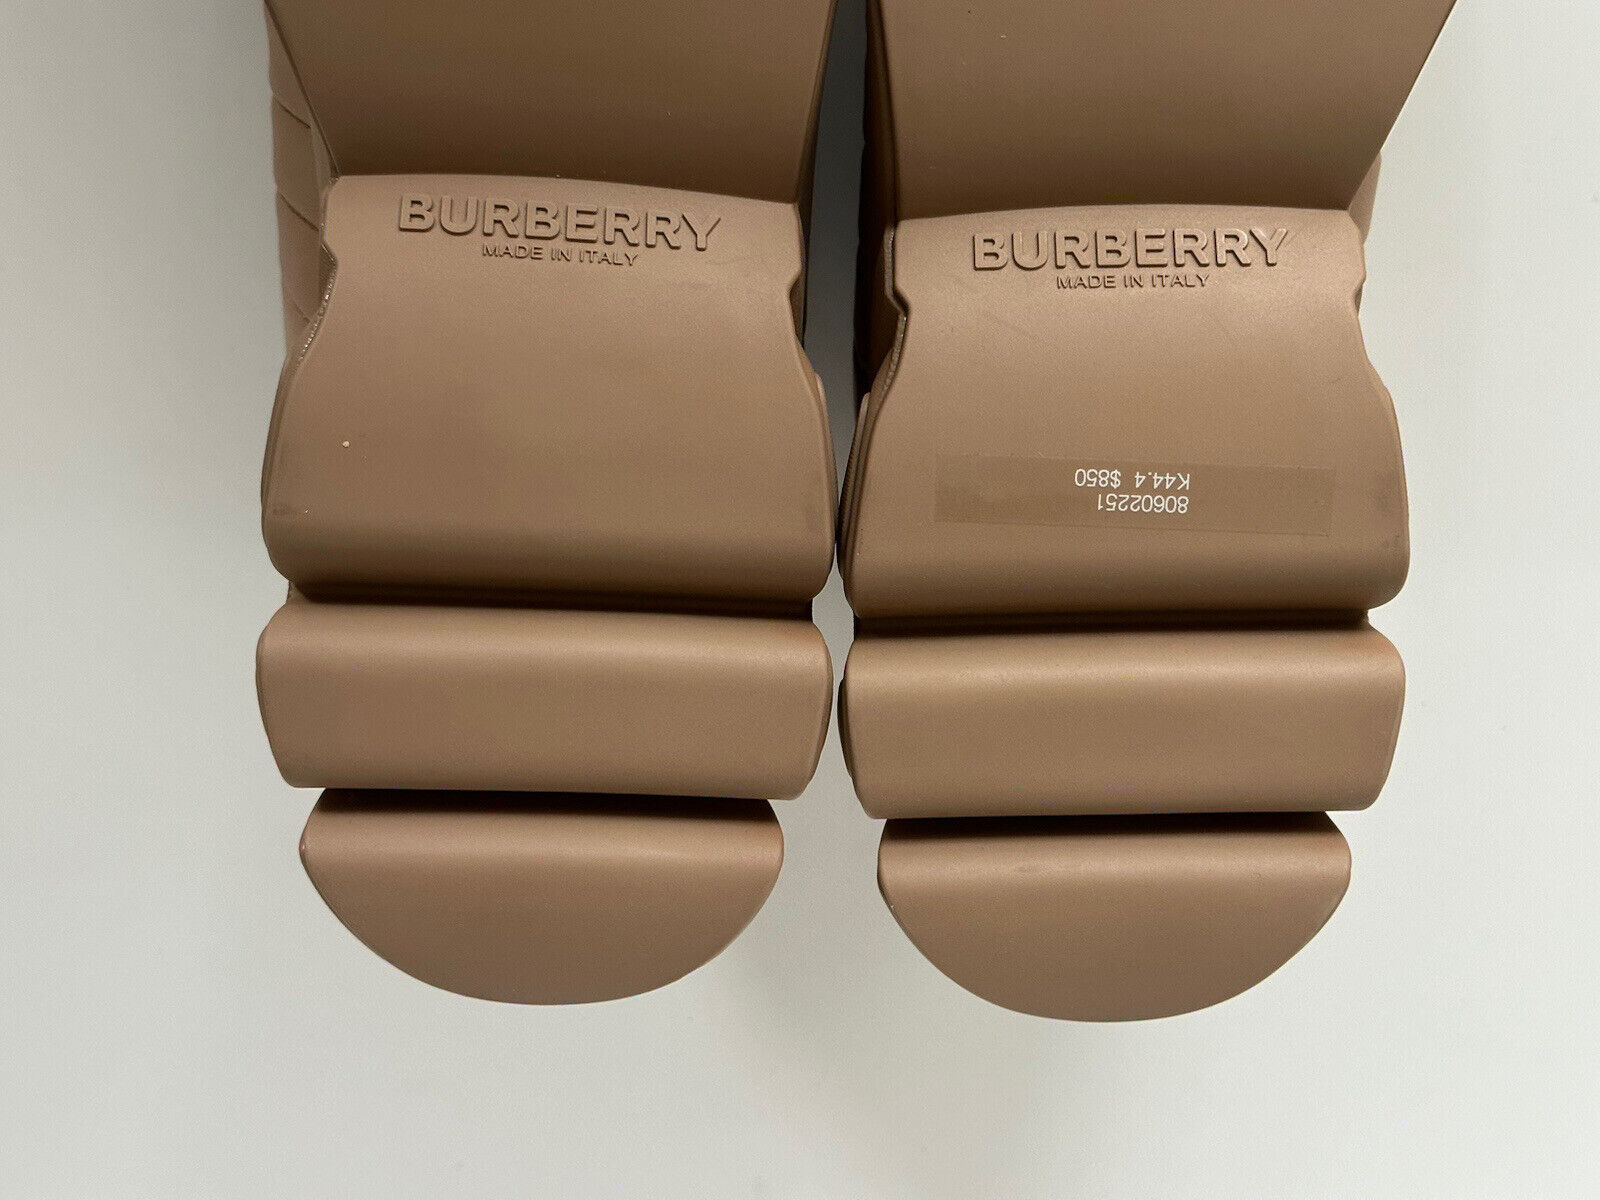 NIB 850 $ Burberry Quilted Dark Biscuit Leder-Sneaker 11 US (44 Eu) 8060225 IT 